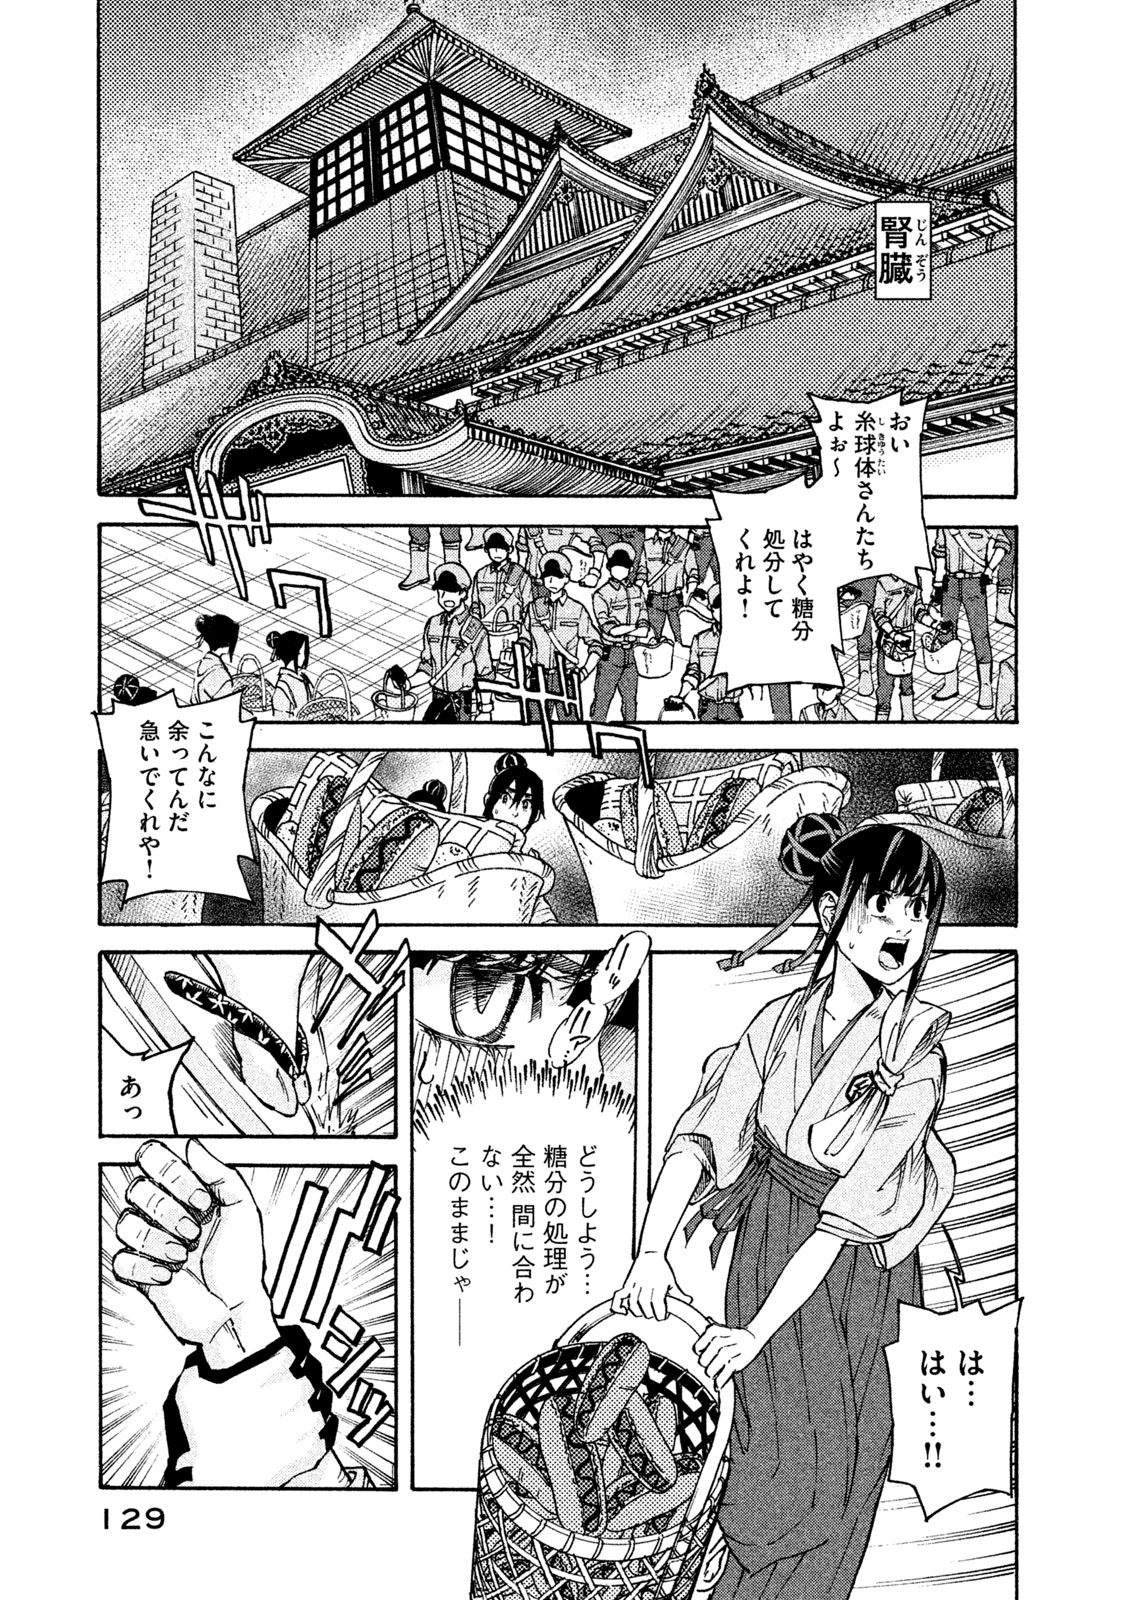 Hataraku Saibou BLACK - Chapter 24 - Page 3